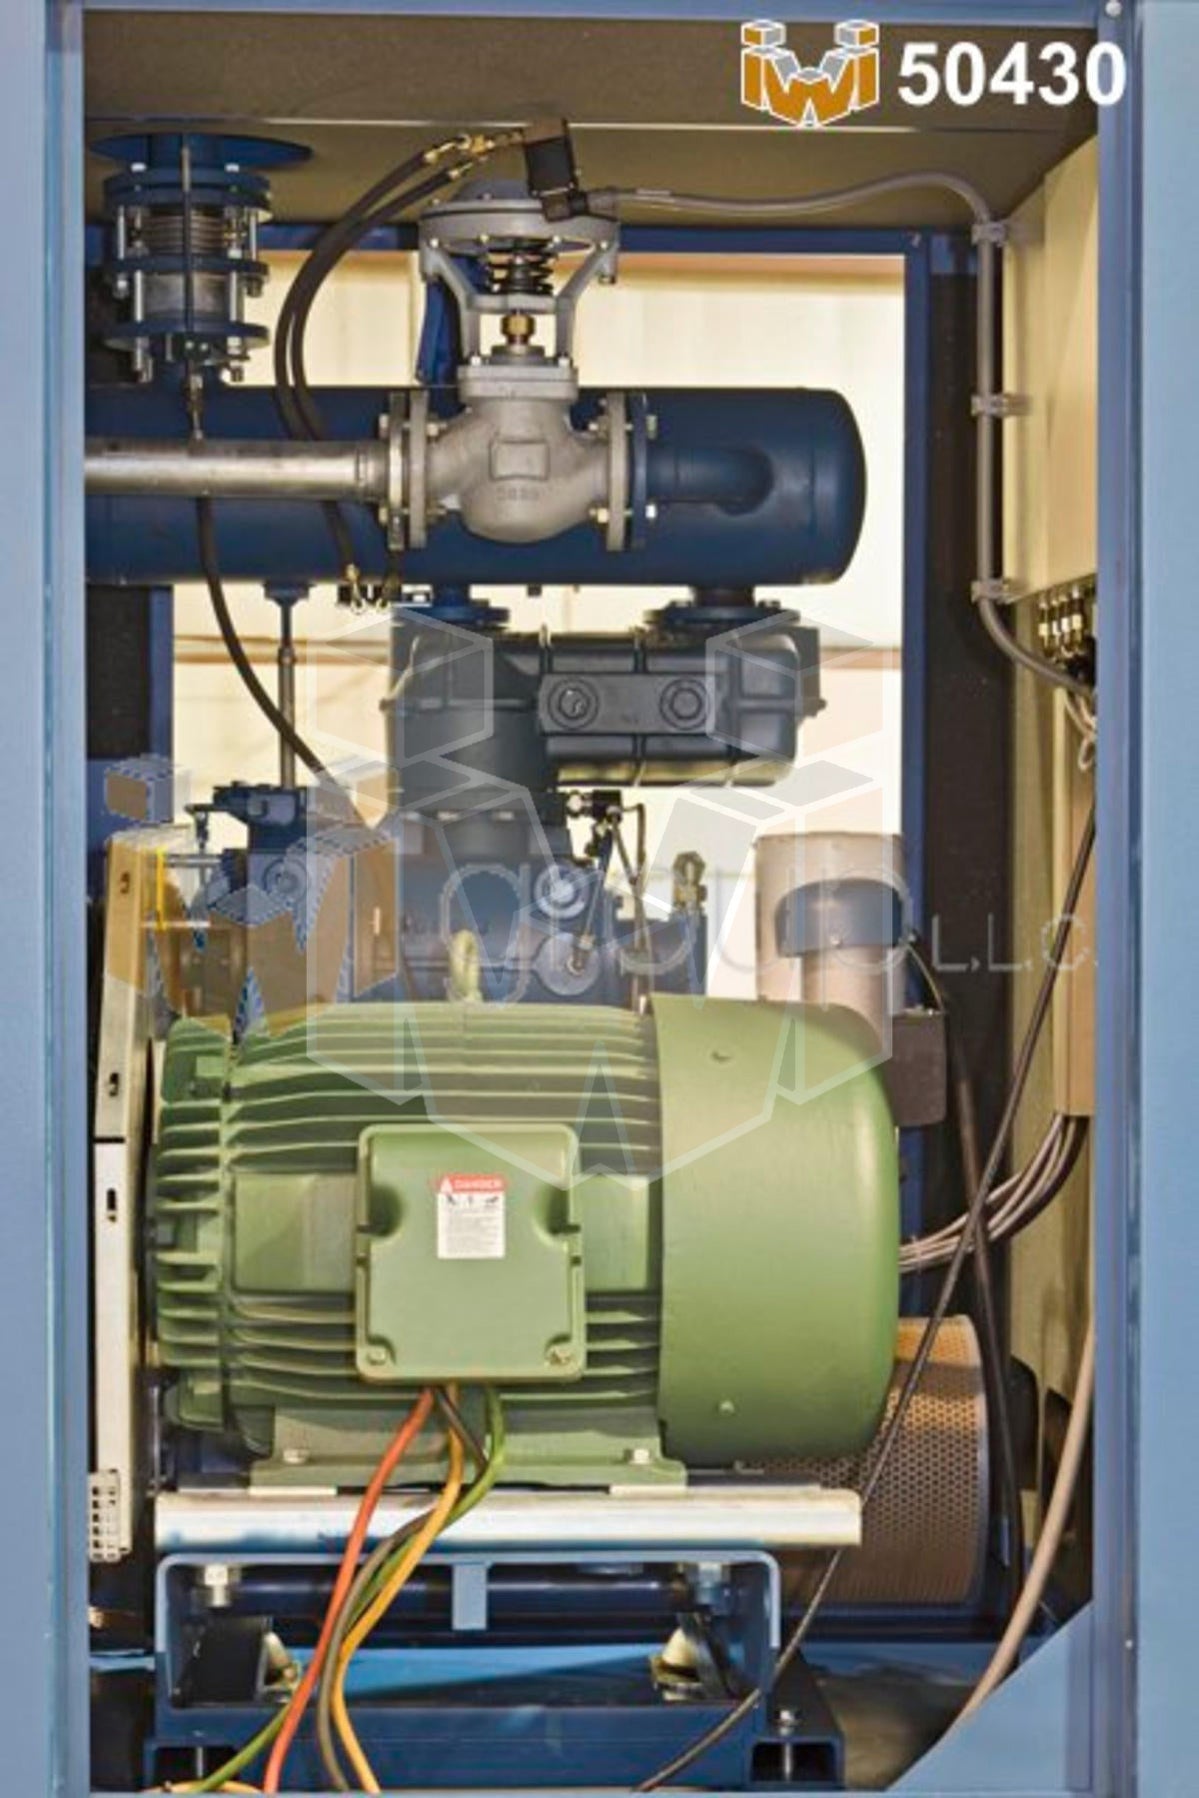 Aerzen/Delta Screw Compressor